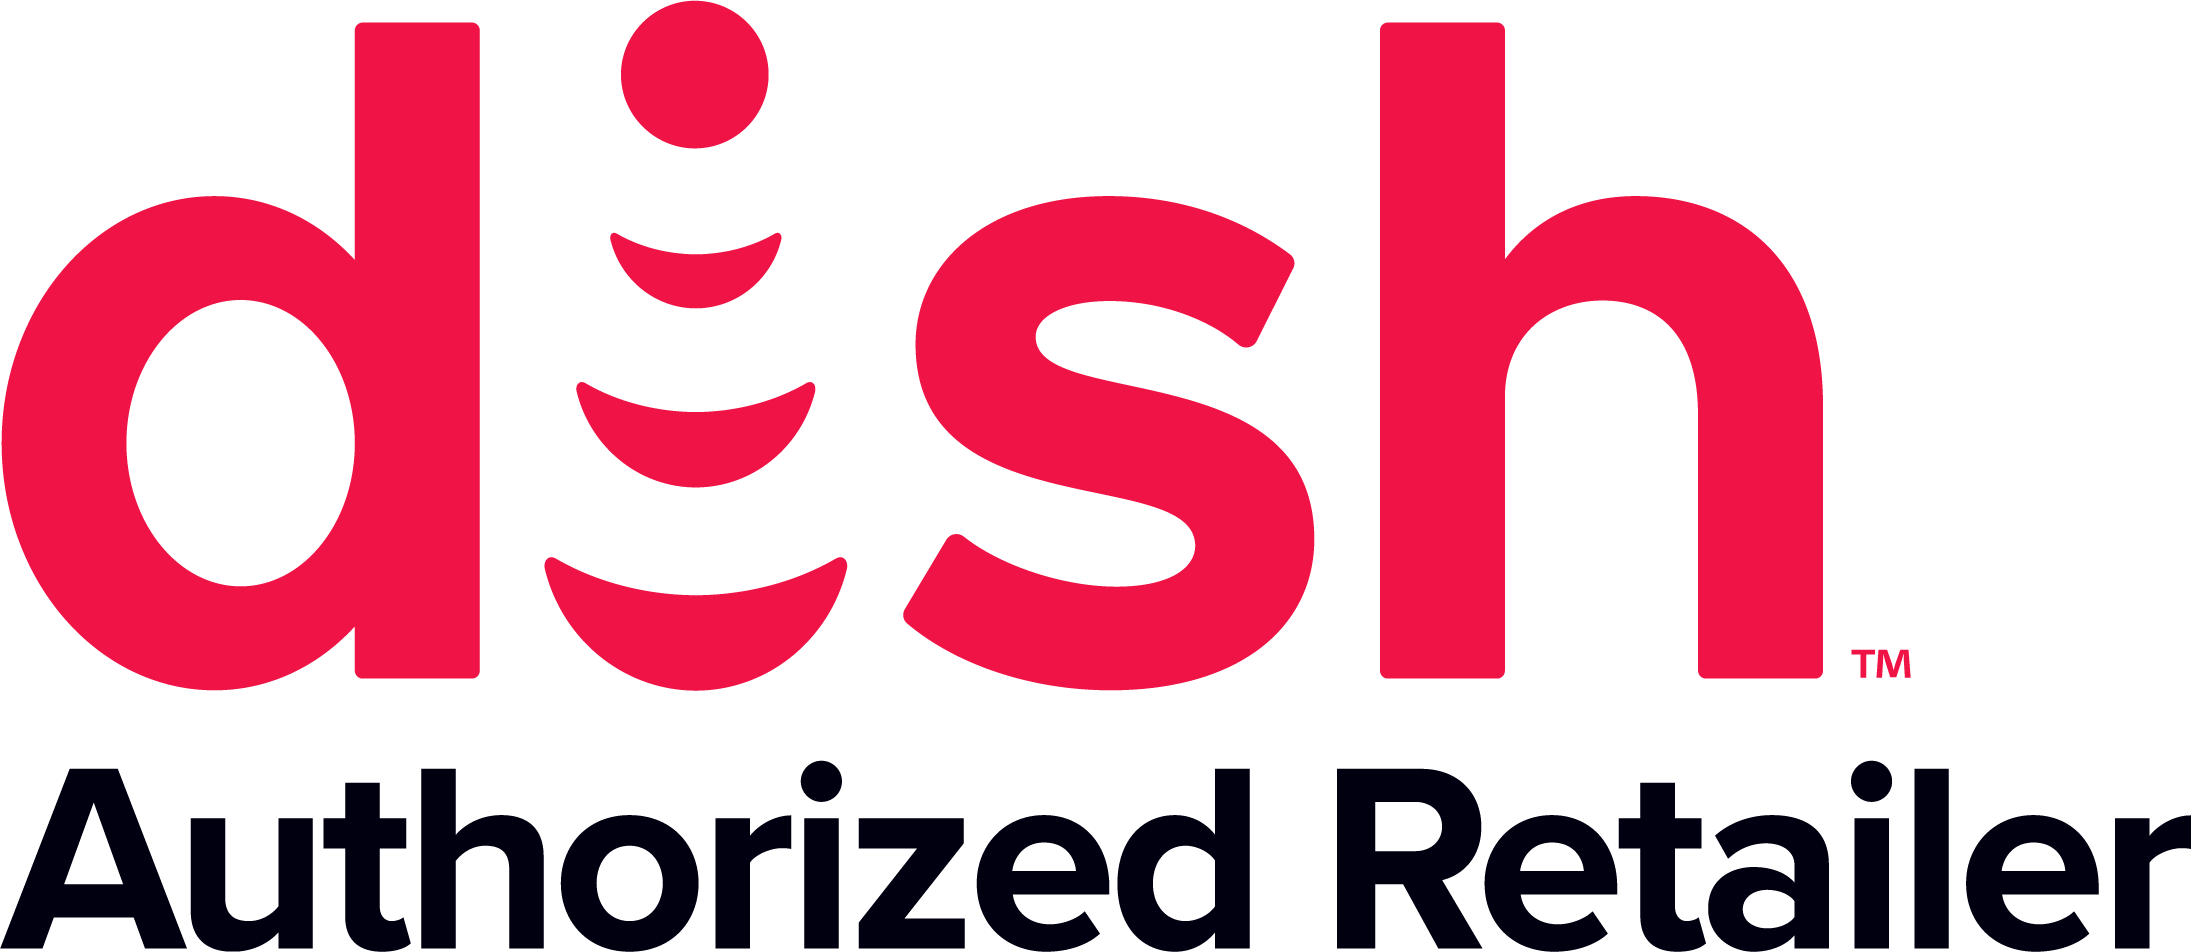 DISH Authorized Retailer for Satellite TV 